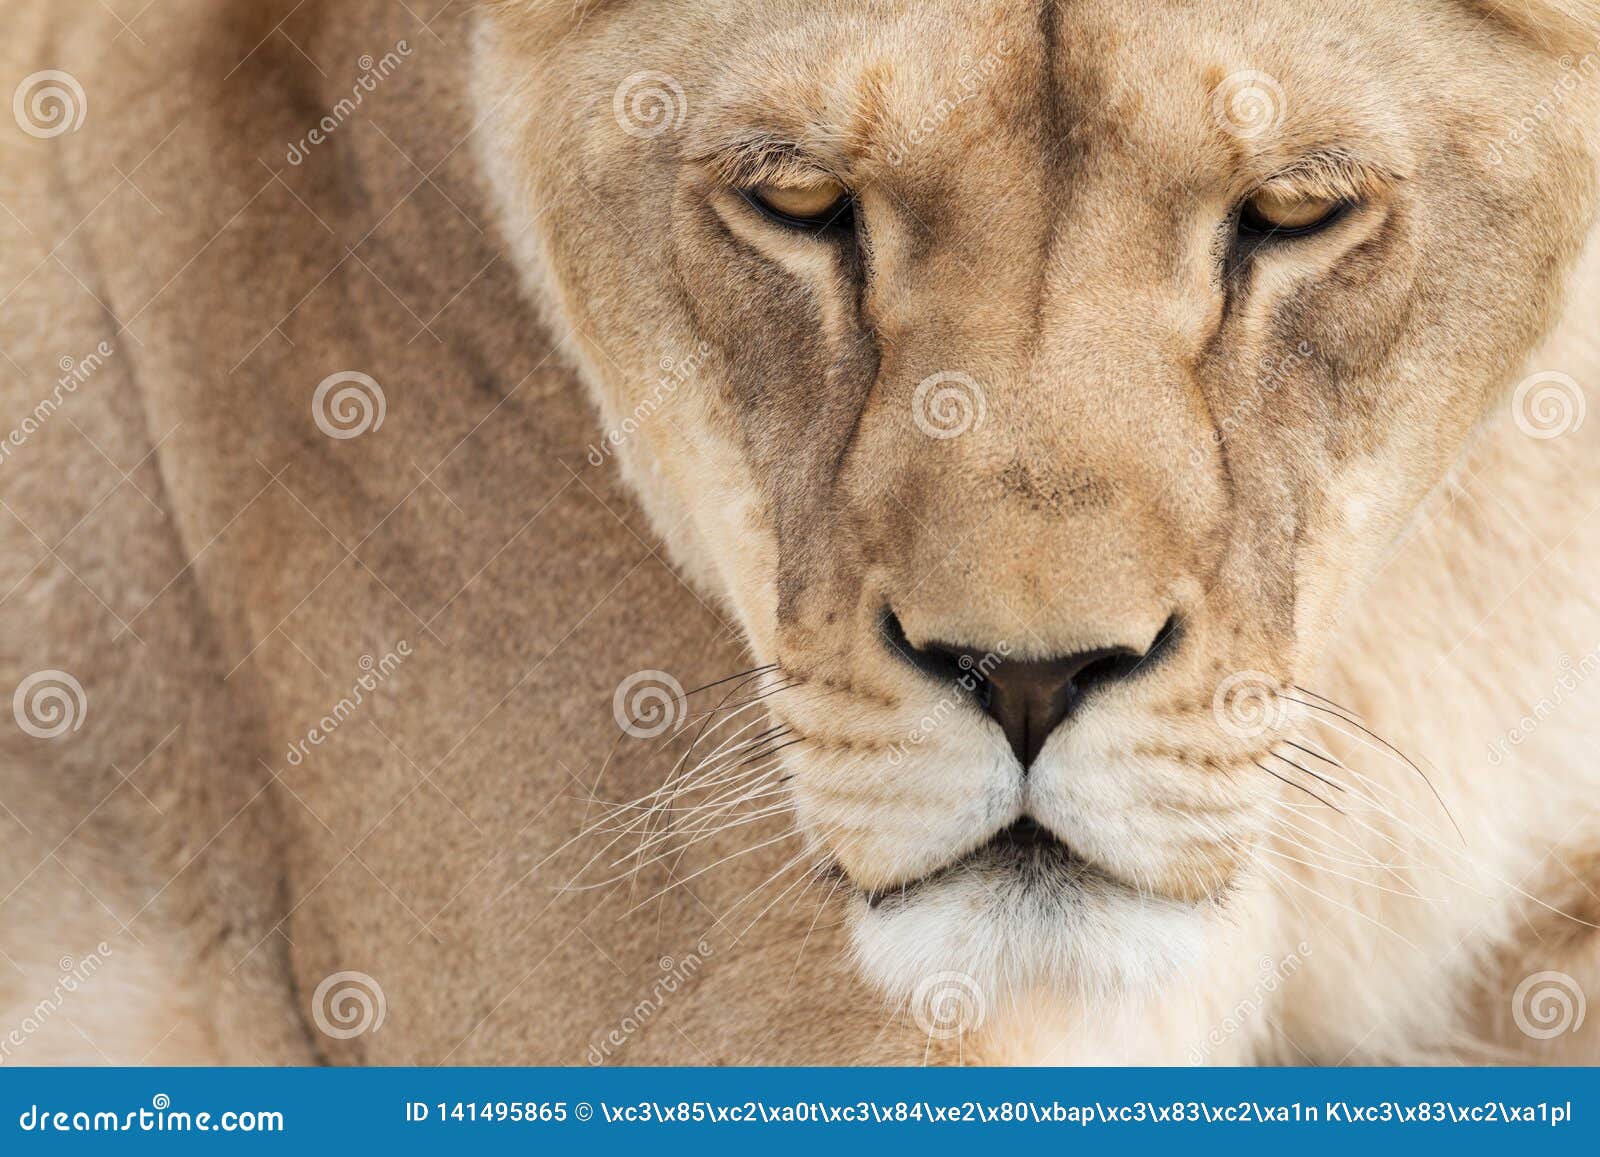 lioness face